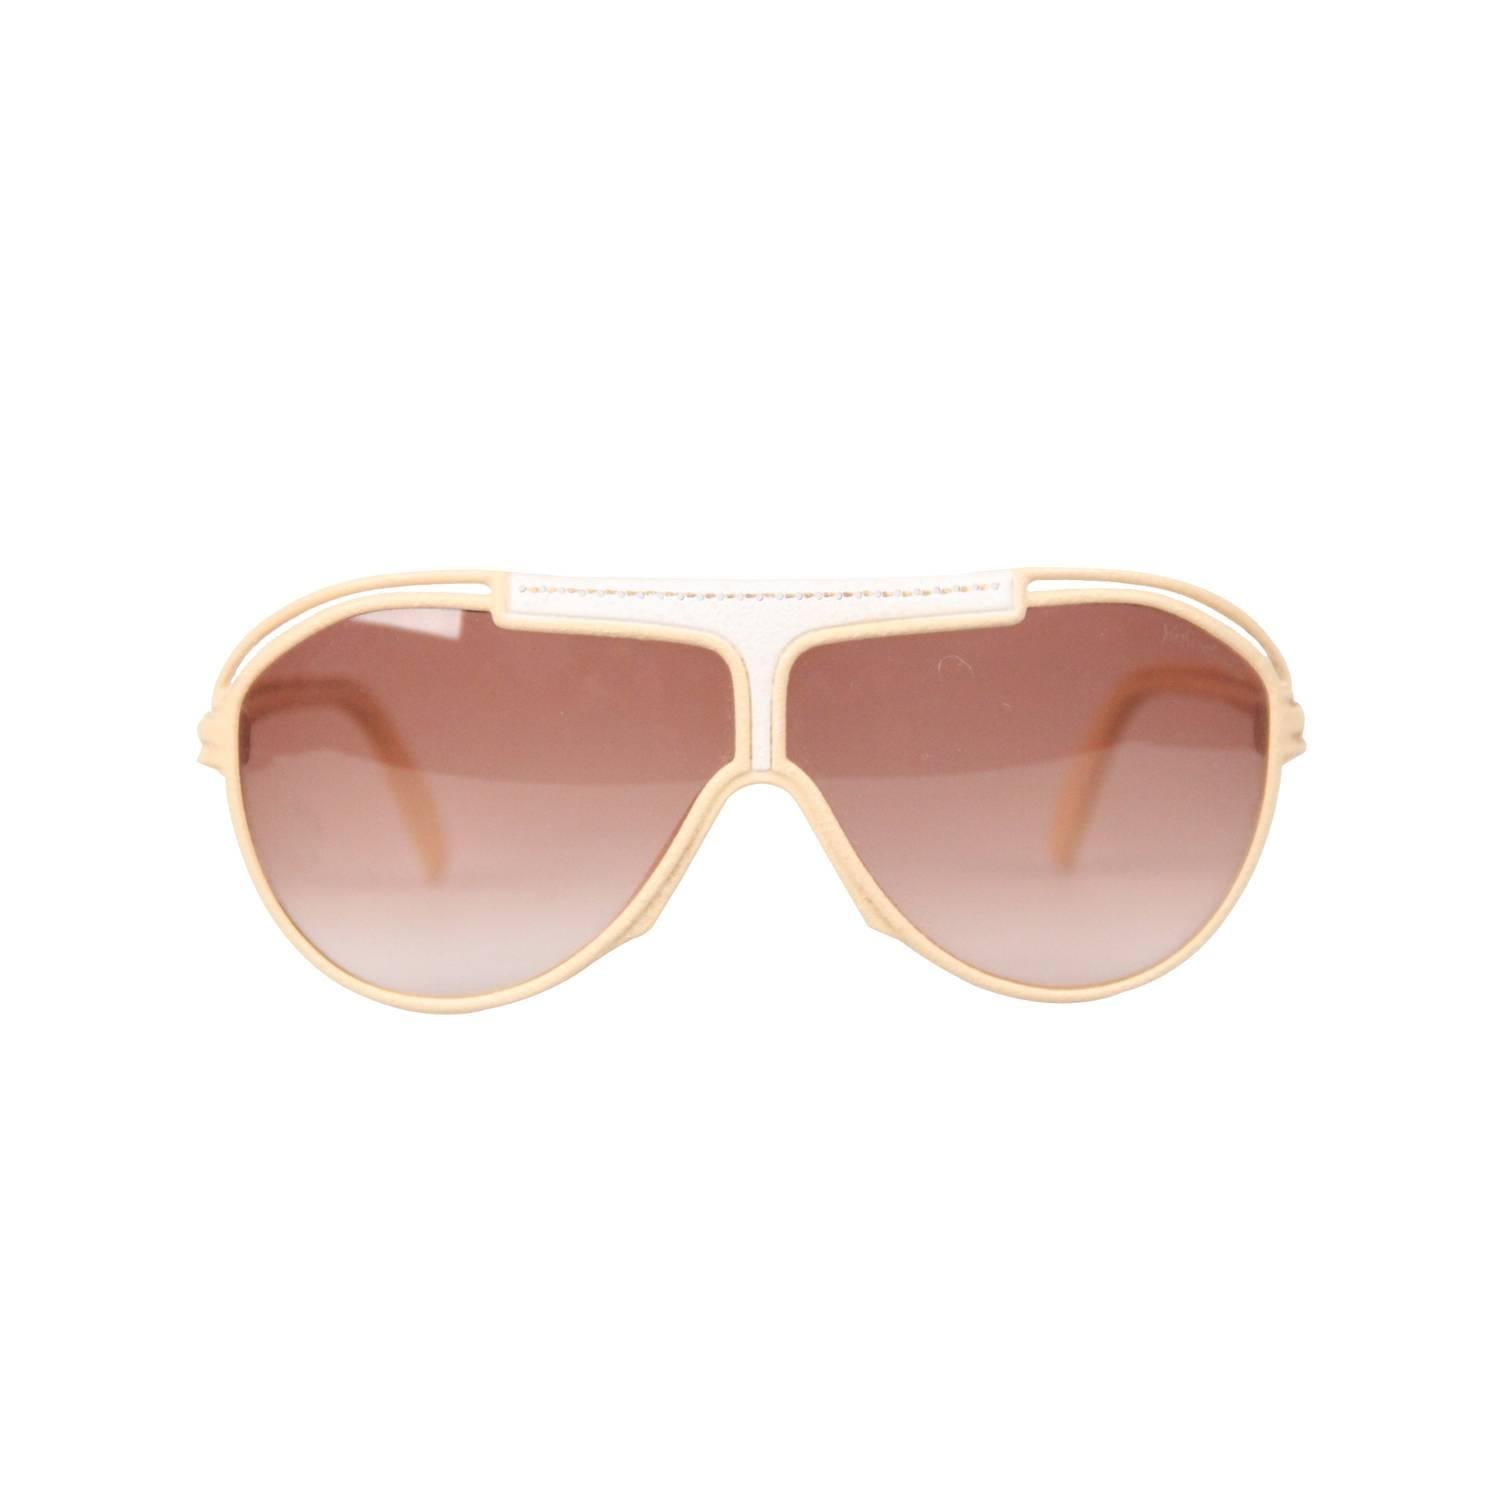 Yves Saint Laurent Vintage Mint Sunglasses Tan Leather Aviator 8359 Y90